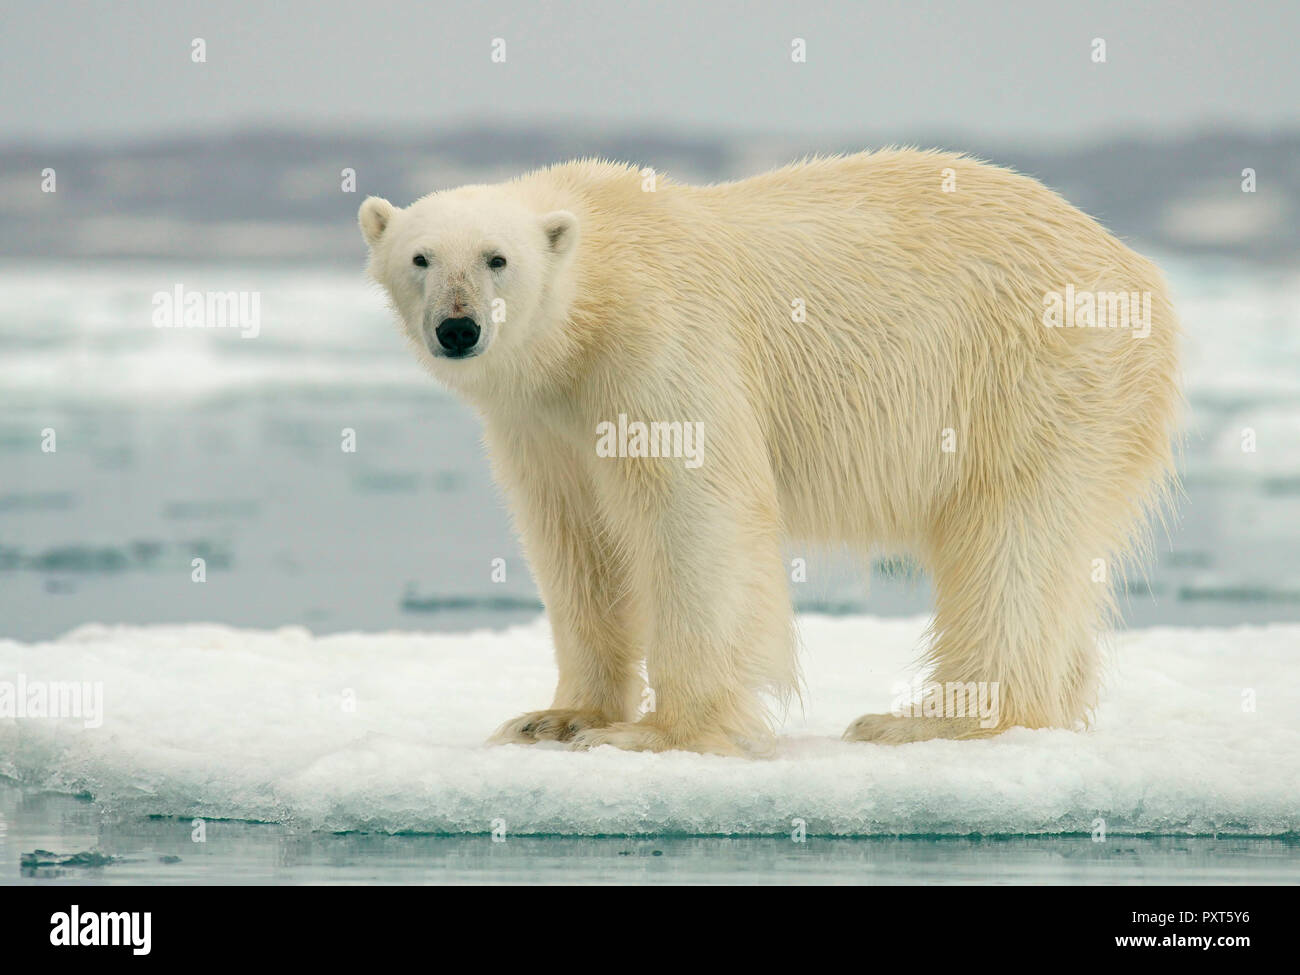 Polar bear (Ursus maritimus) standing on ice floe, Svalbard, Norwegian Arctic, Norway Stock Photo